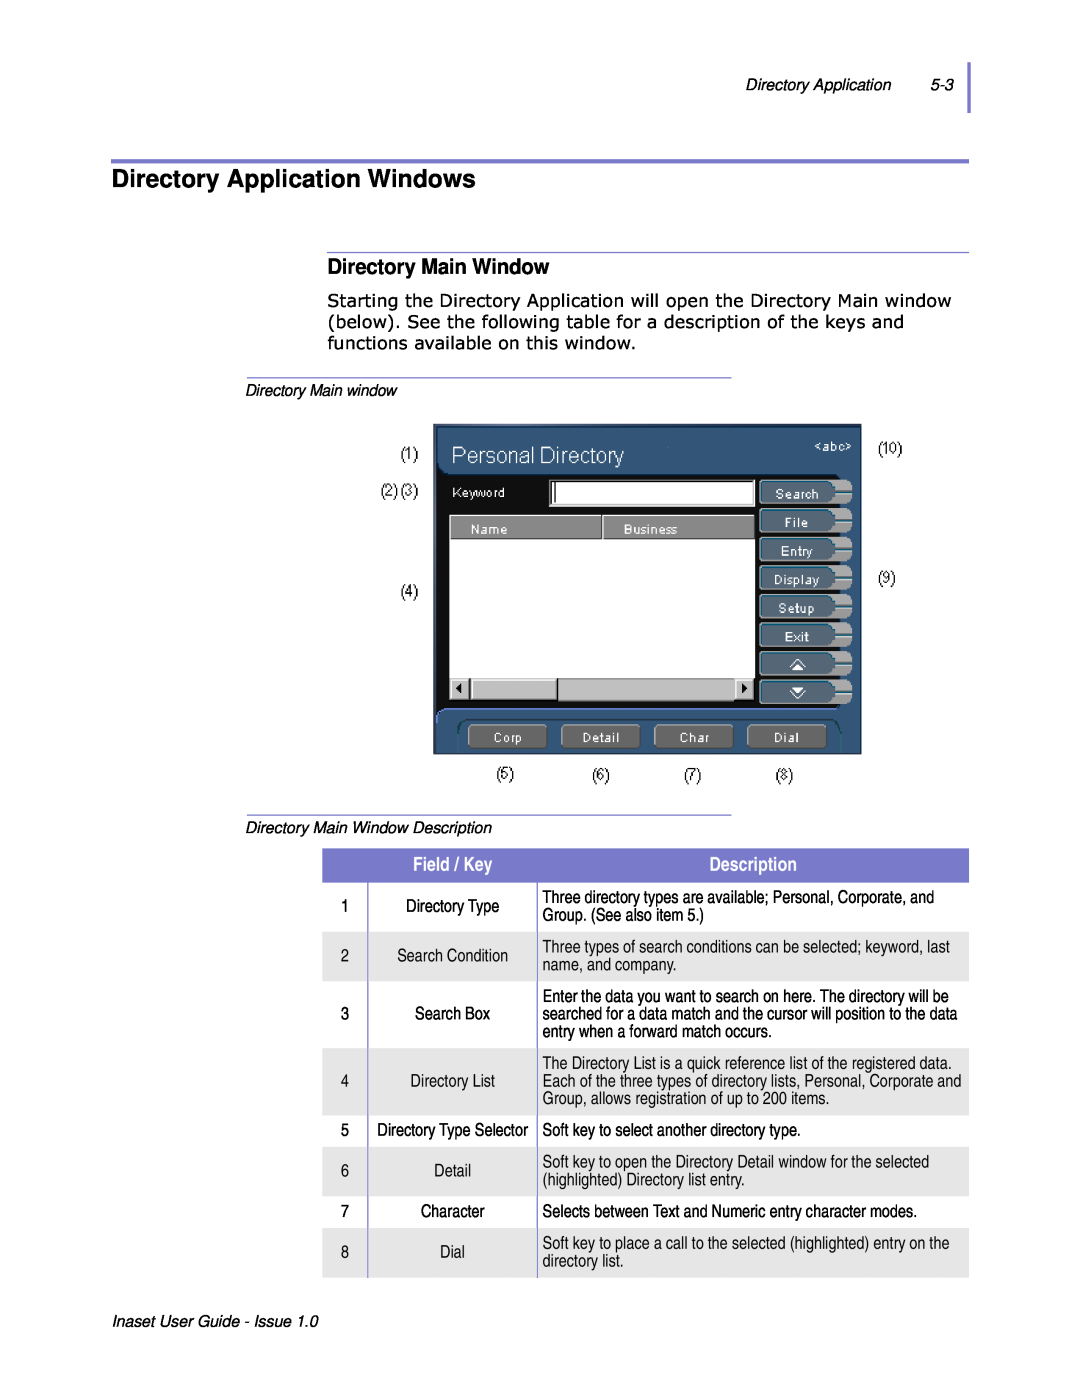 NEC NEAX 2000 IPS manual Directory Application Windows, Directory Main Window, Field / Key, Description 